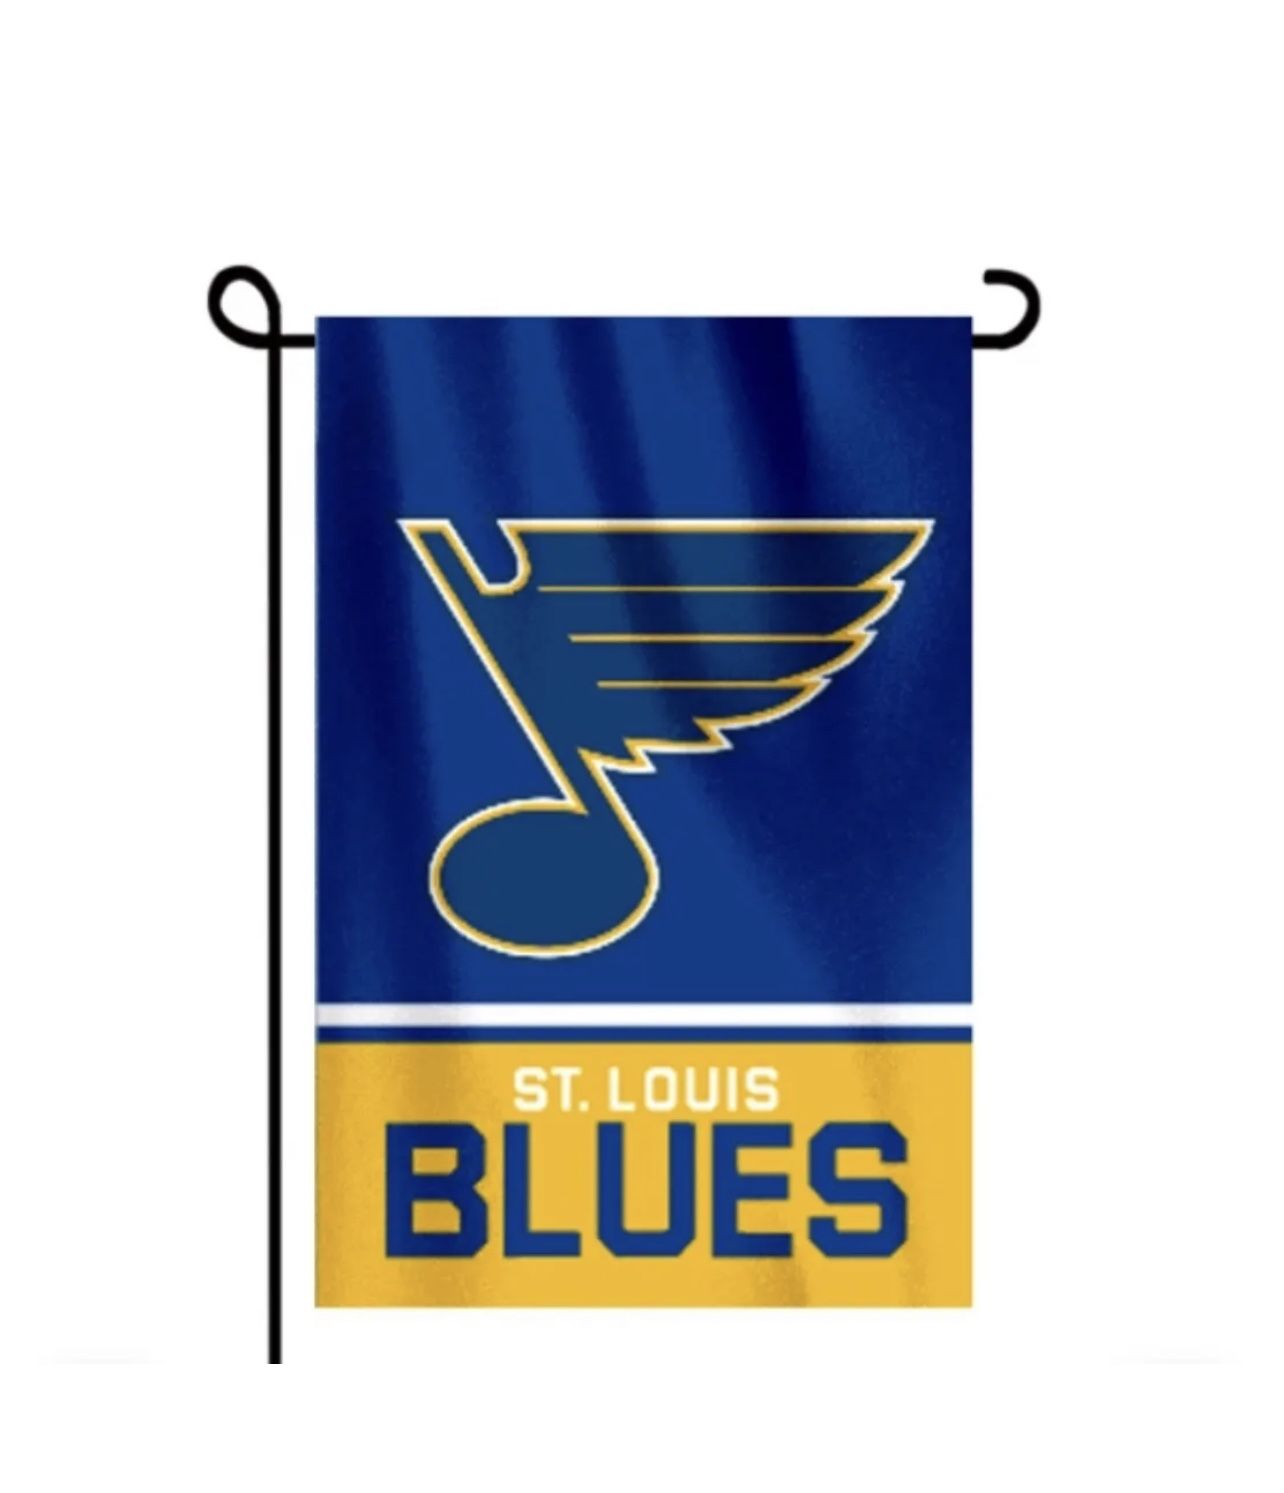 NHL HOCKEY GARDEN FLAG 12x18 ST LOUIS BLUES for Sale in